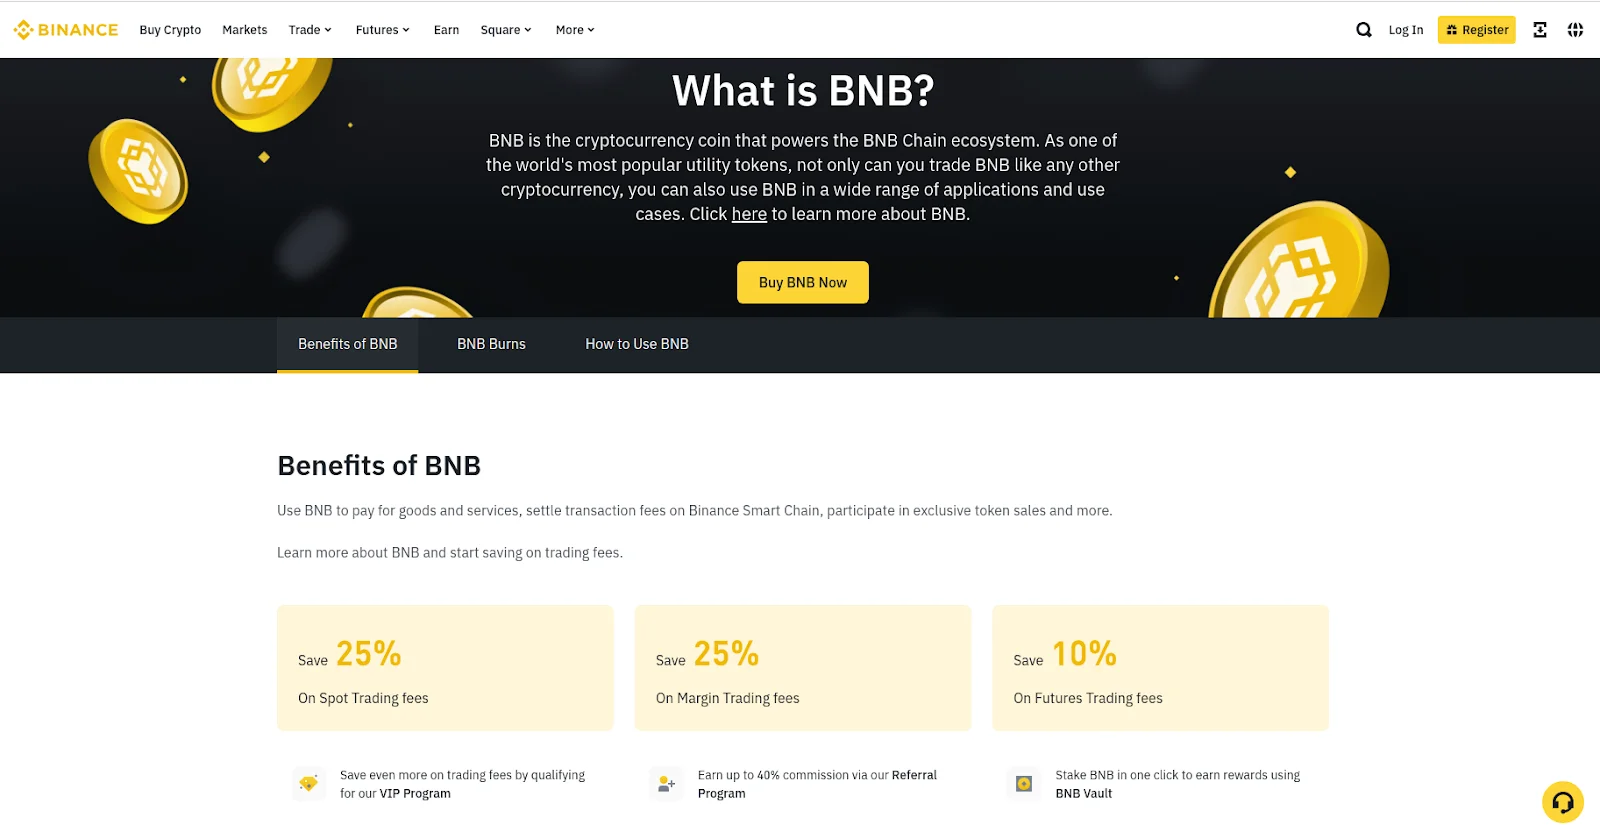 Binance landing page explaining the benefits of BNB